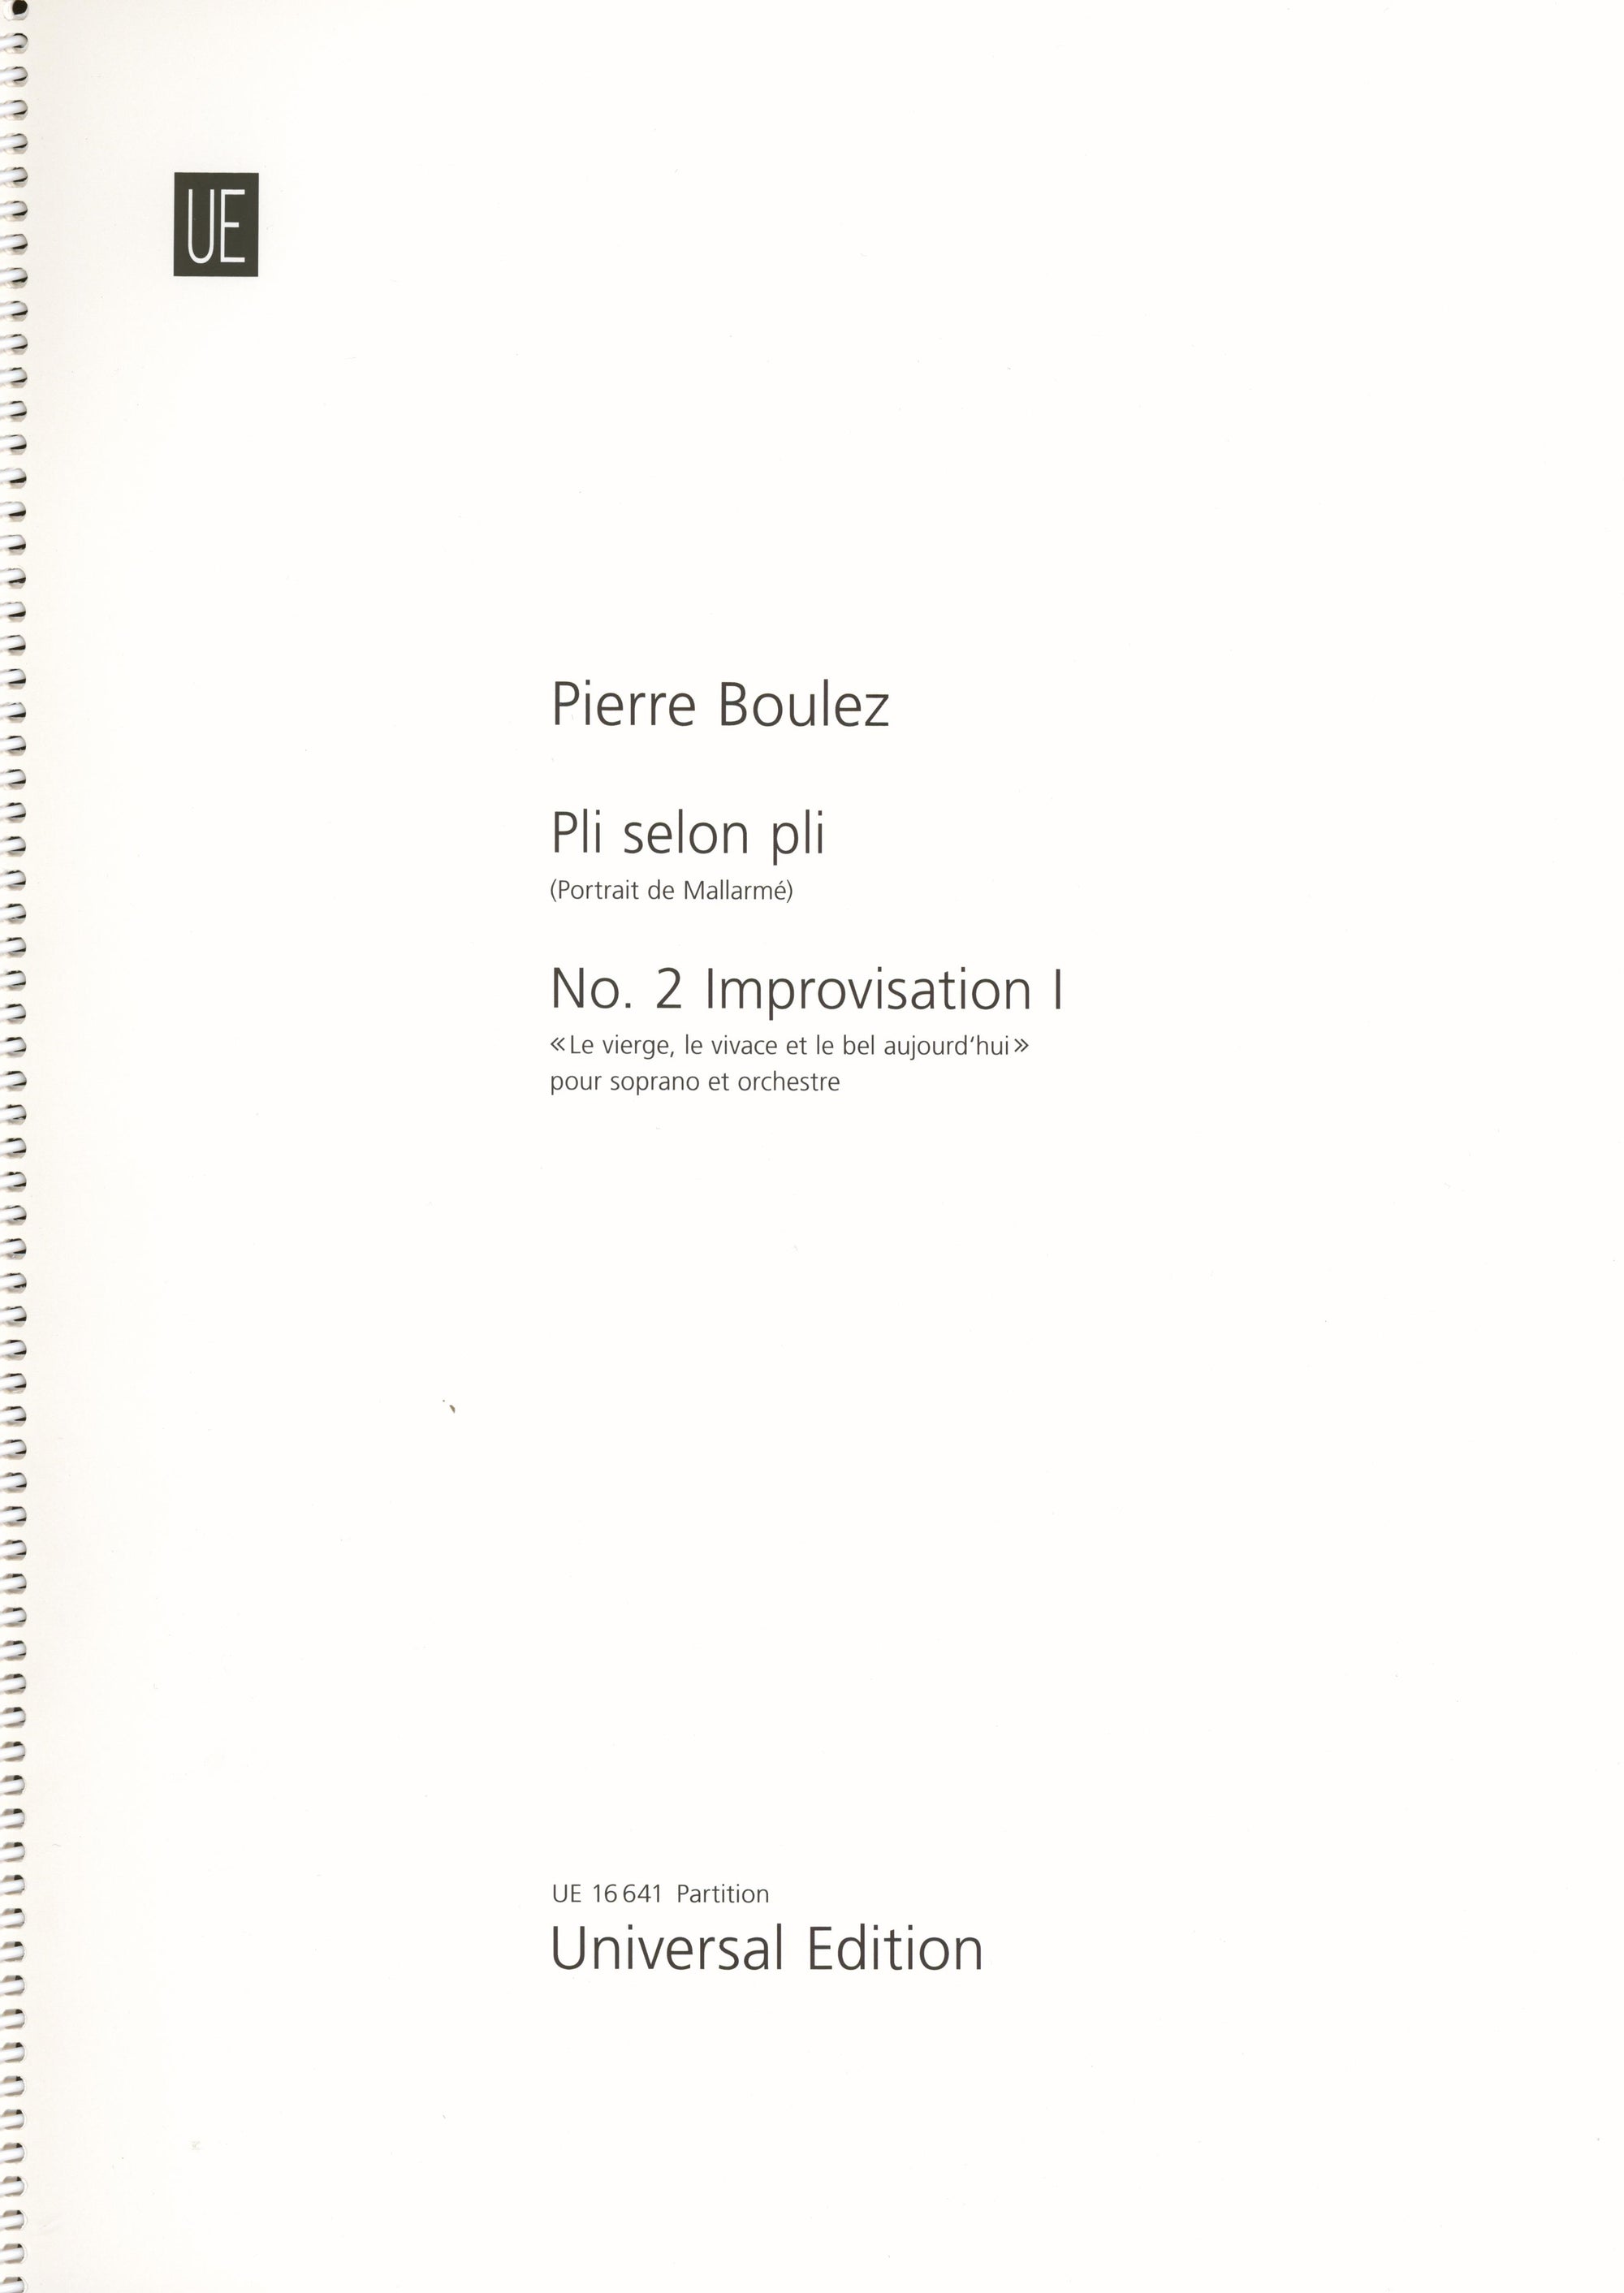 Pierre: Improvisation I, No. 2 from "Pli selon pli"